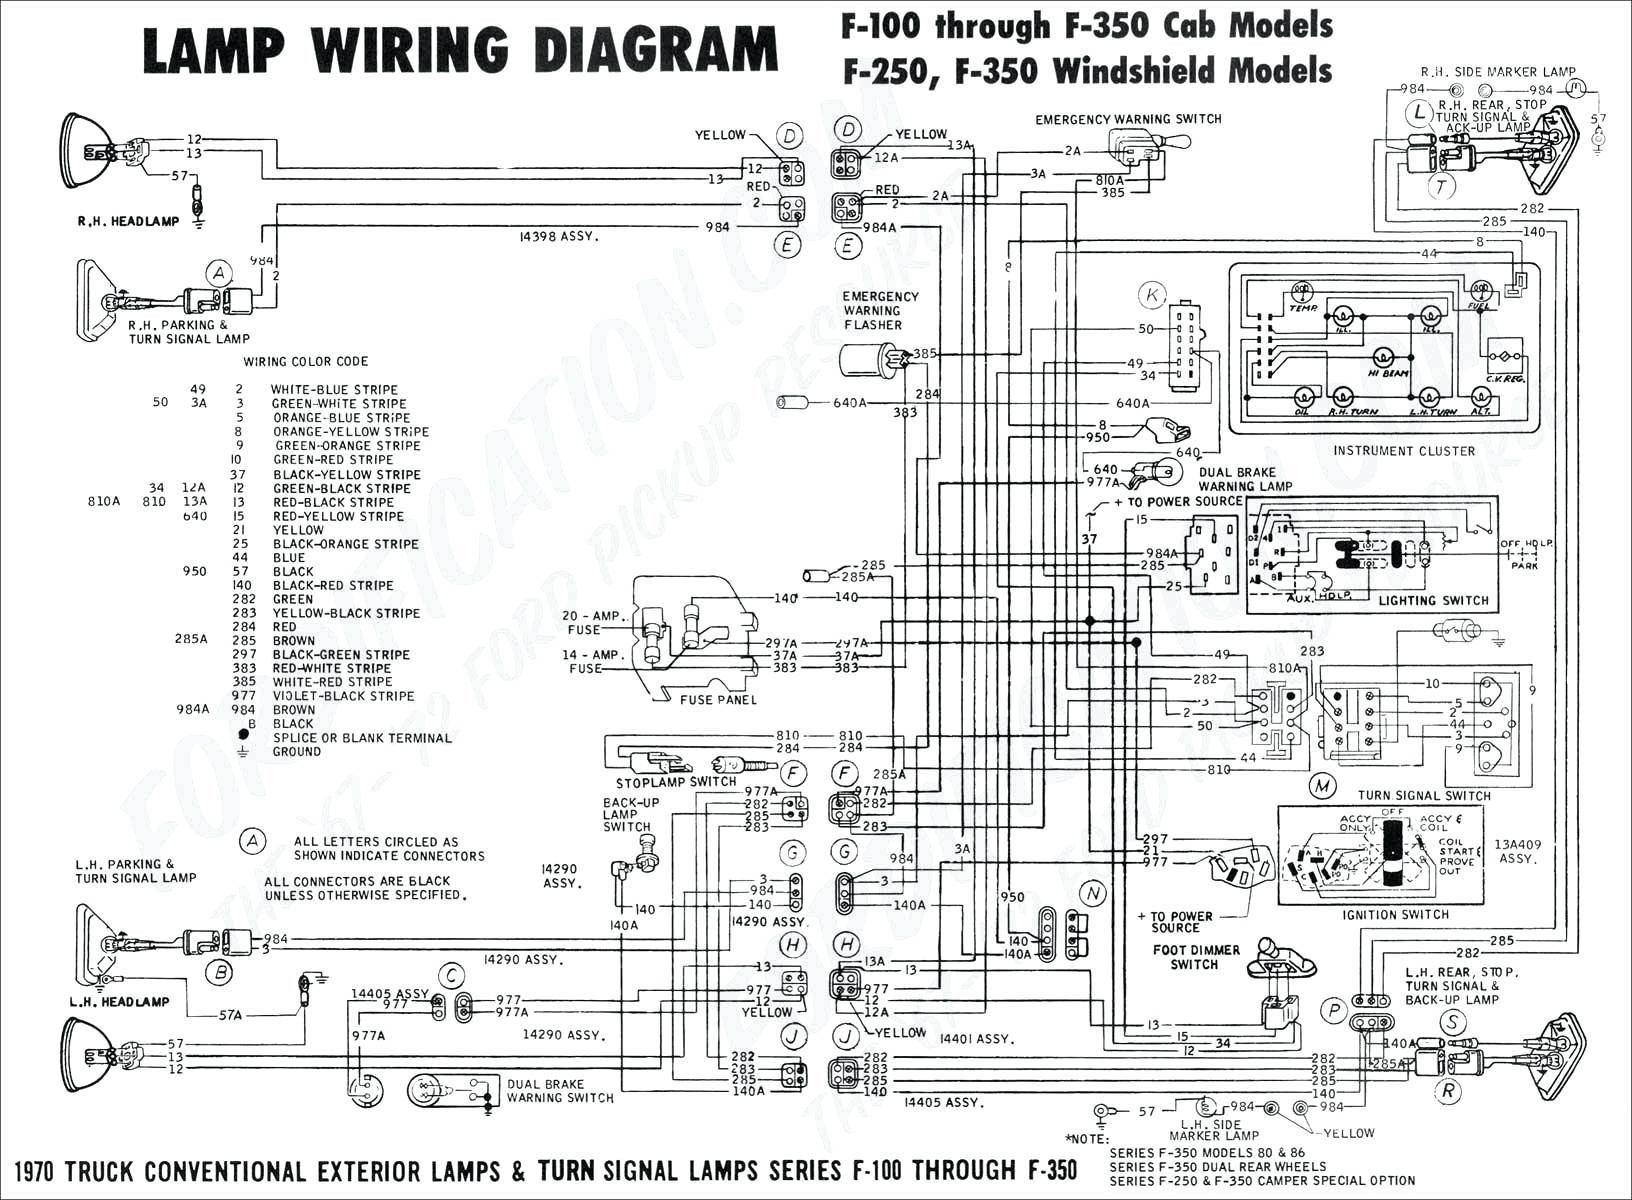 Car Power Window Circuit Diagram Car Electrical Wiring Diagrams Pdf Wiring Diagram toolbox Of Car Power Window Circuit Diagram